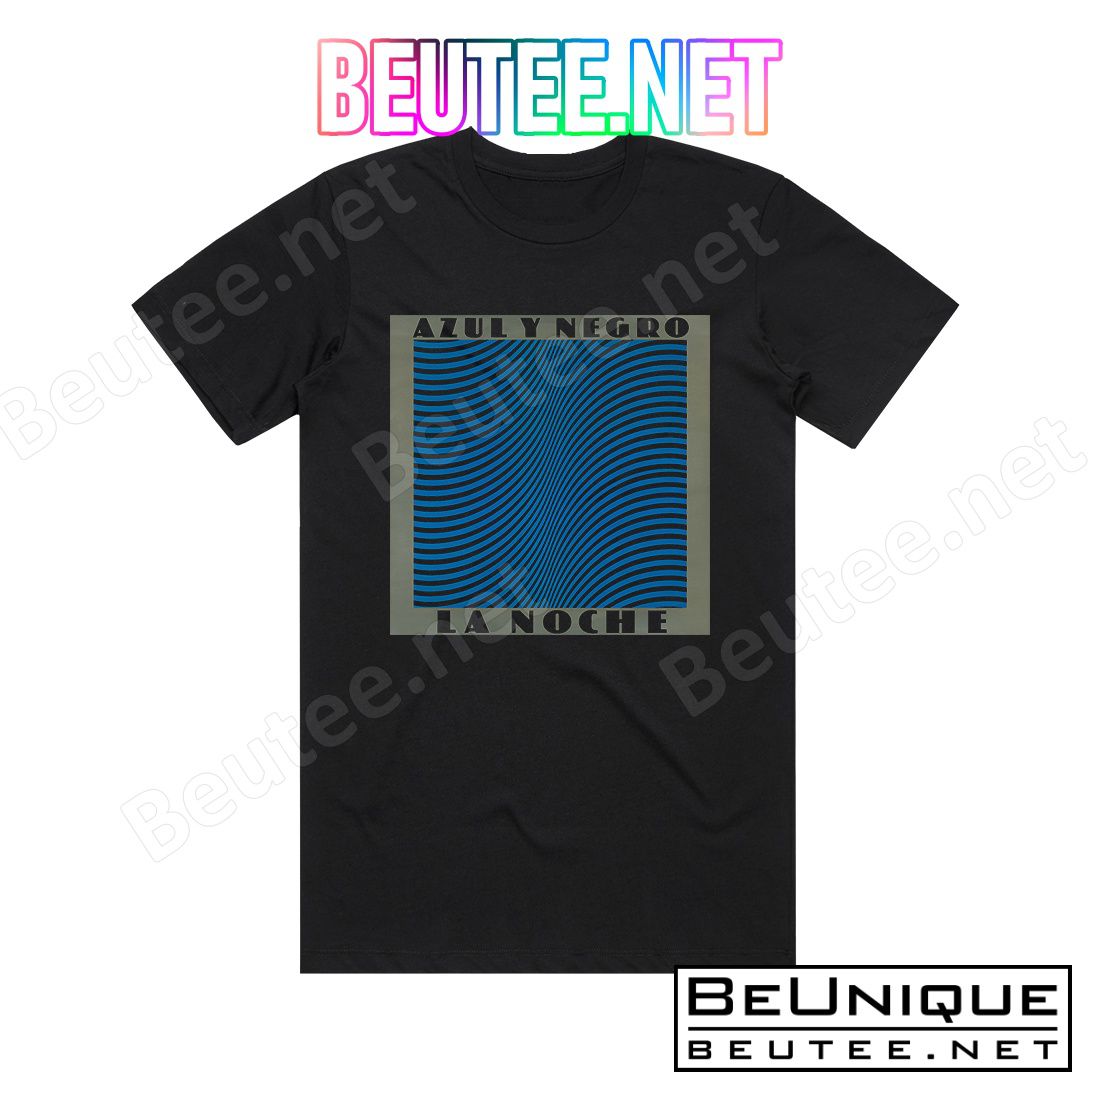 Azul y Negro La Noche Album Cover T-Shirt